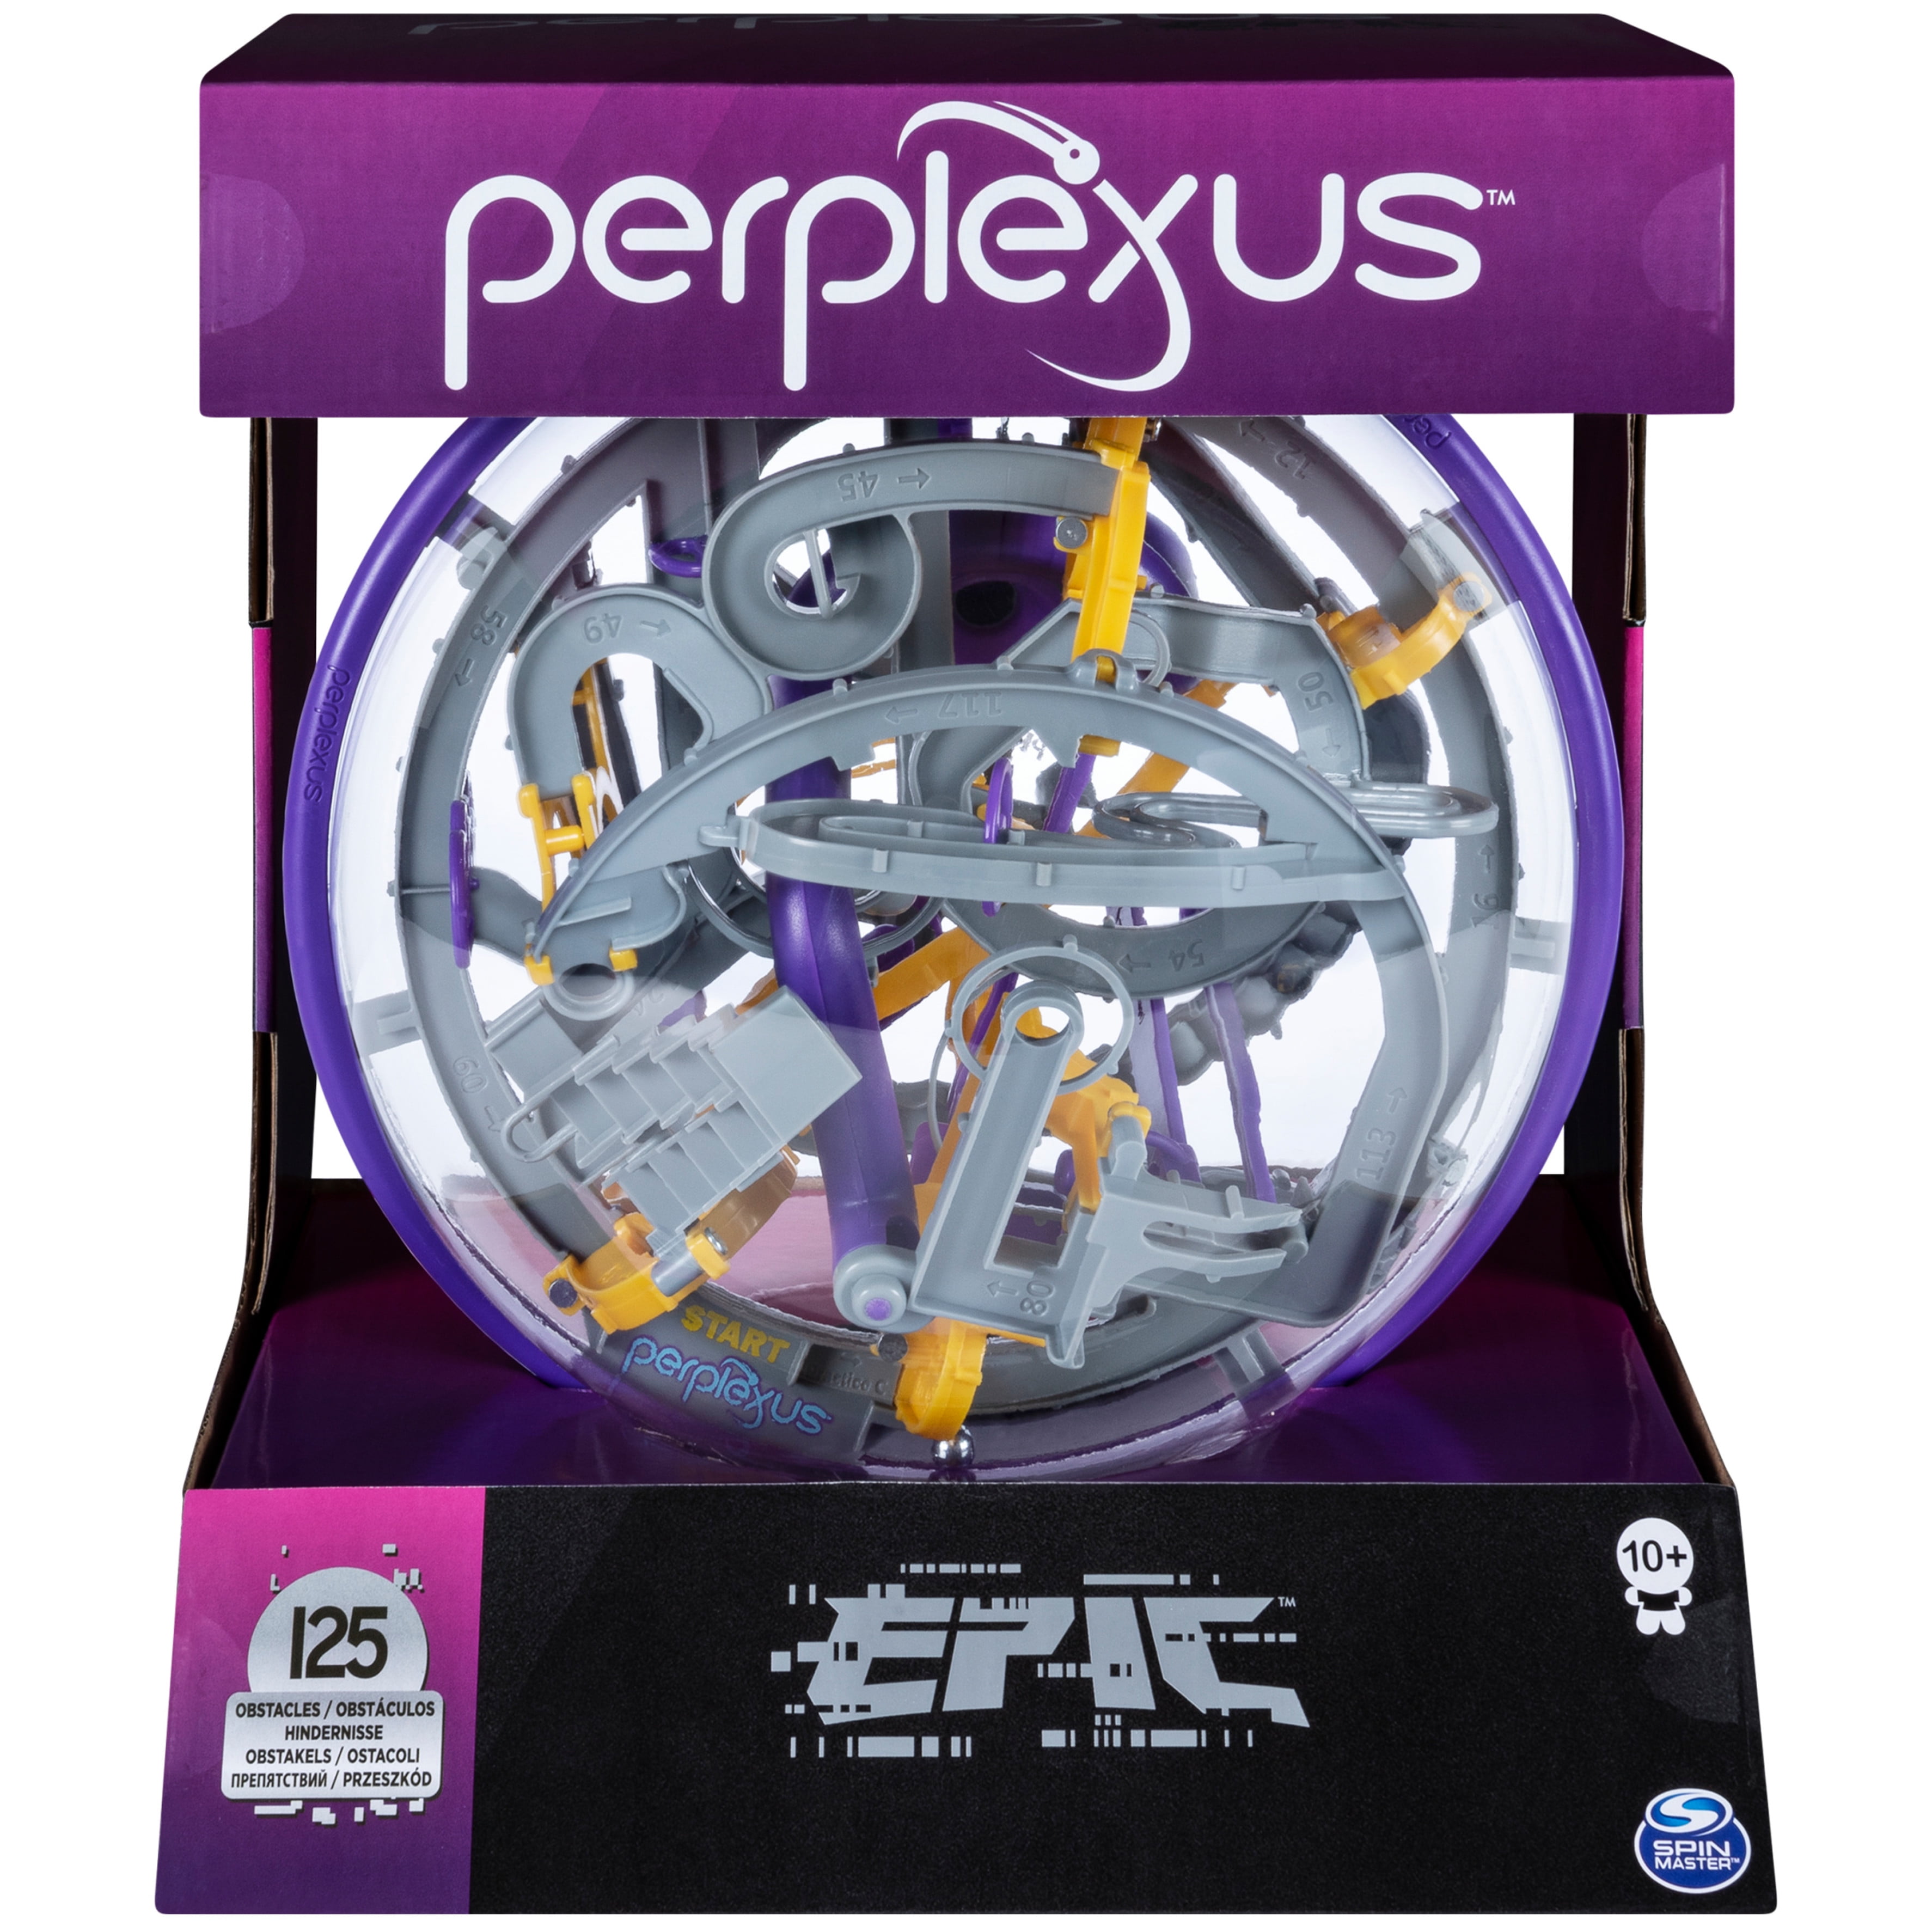 Perplexus Portal 3D Maze